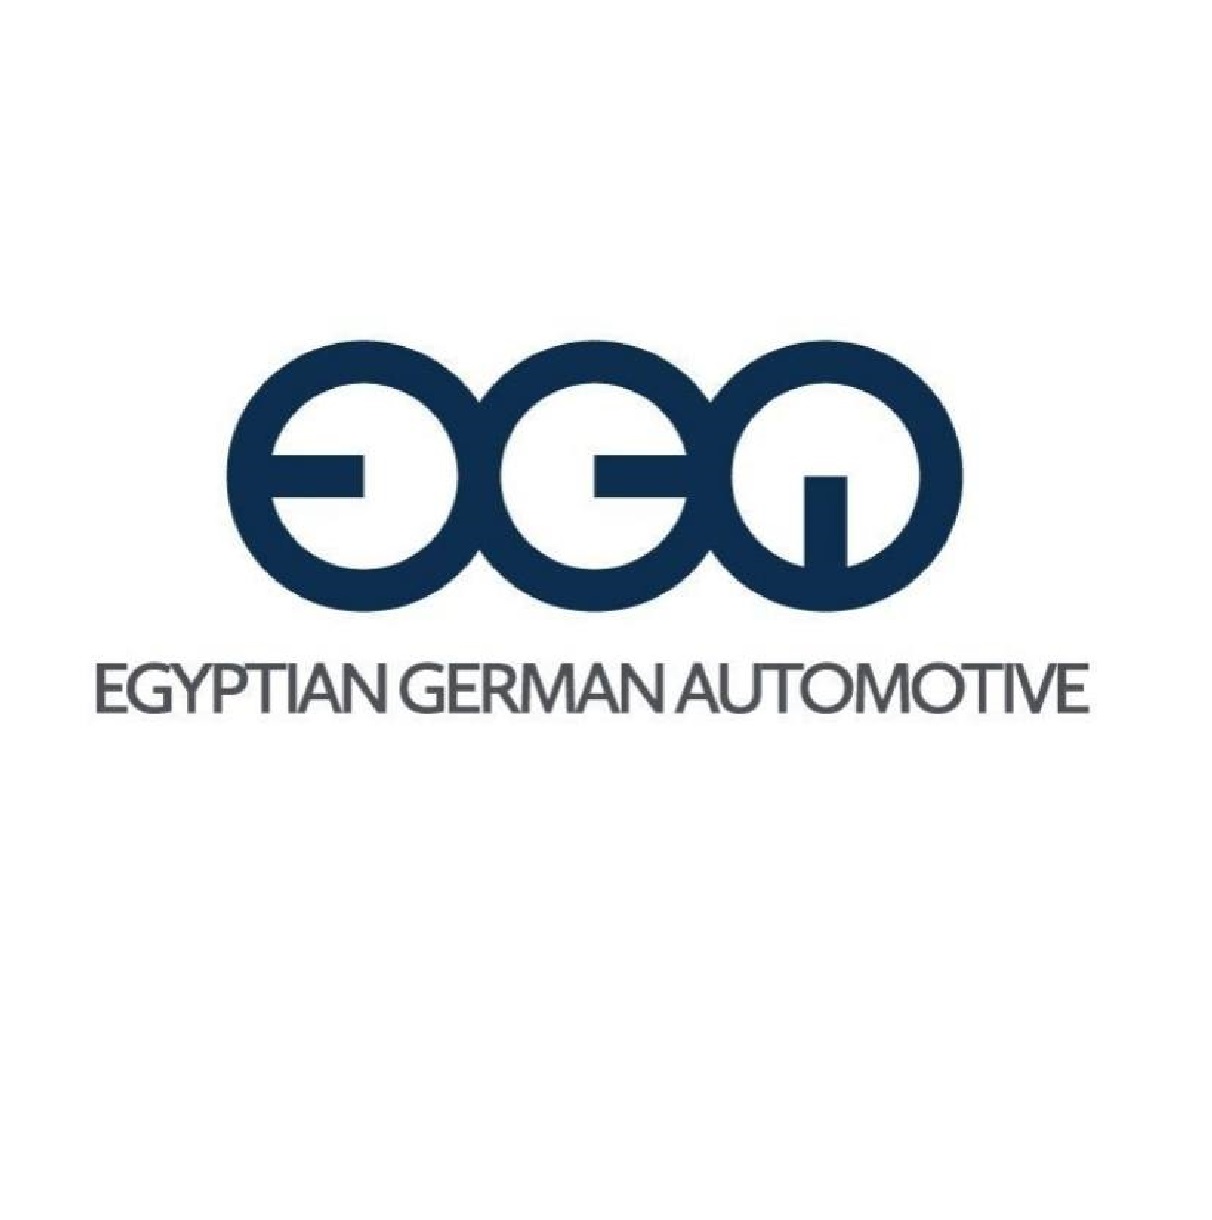 Egyptian German Automotive